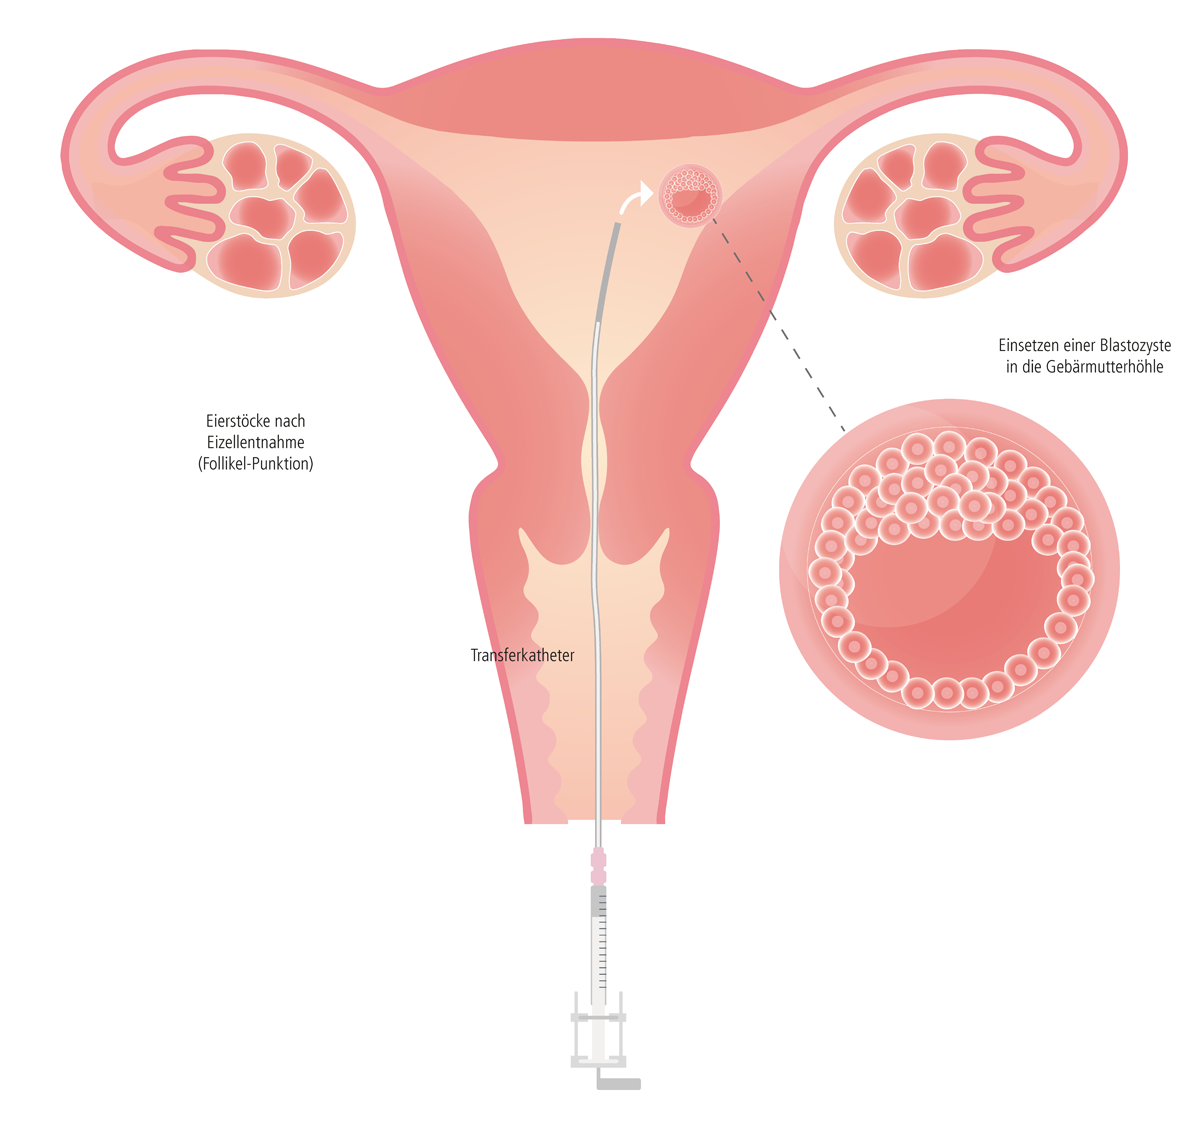 Schematic layout of embryo transfer during IVF treatment │ © 2022 Next Fertility IVF Prof. Zech • Member of Next Clinics